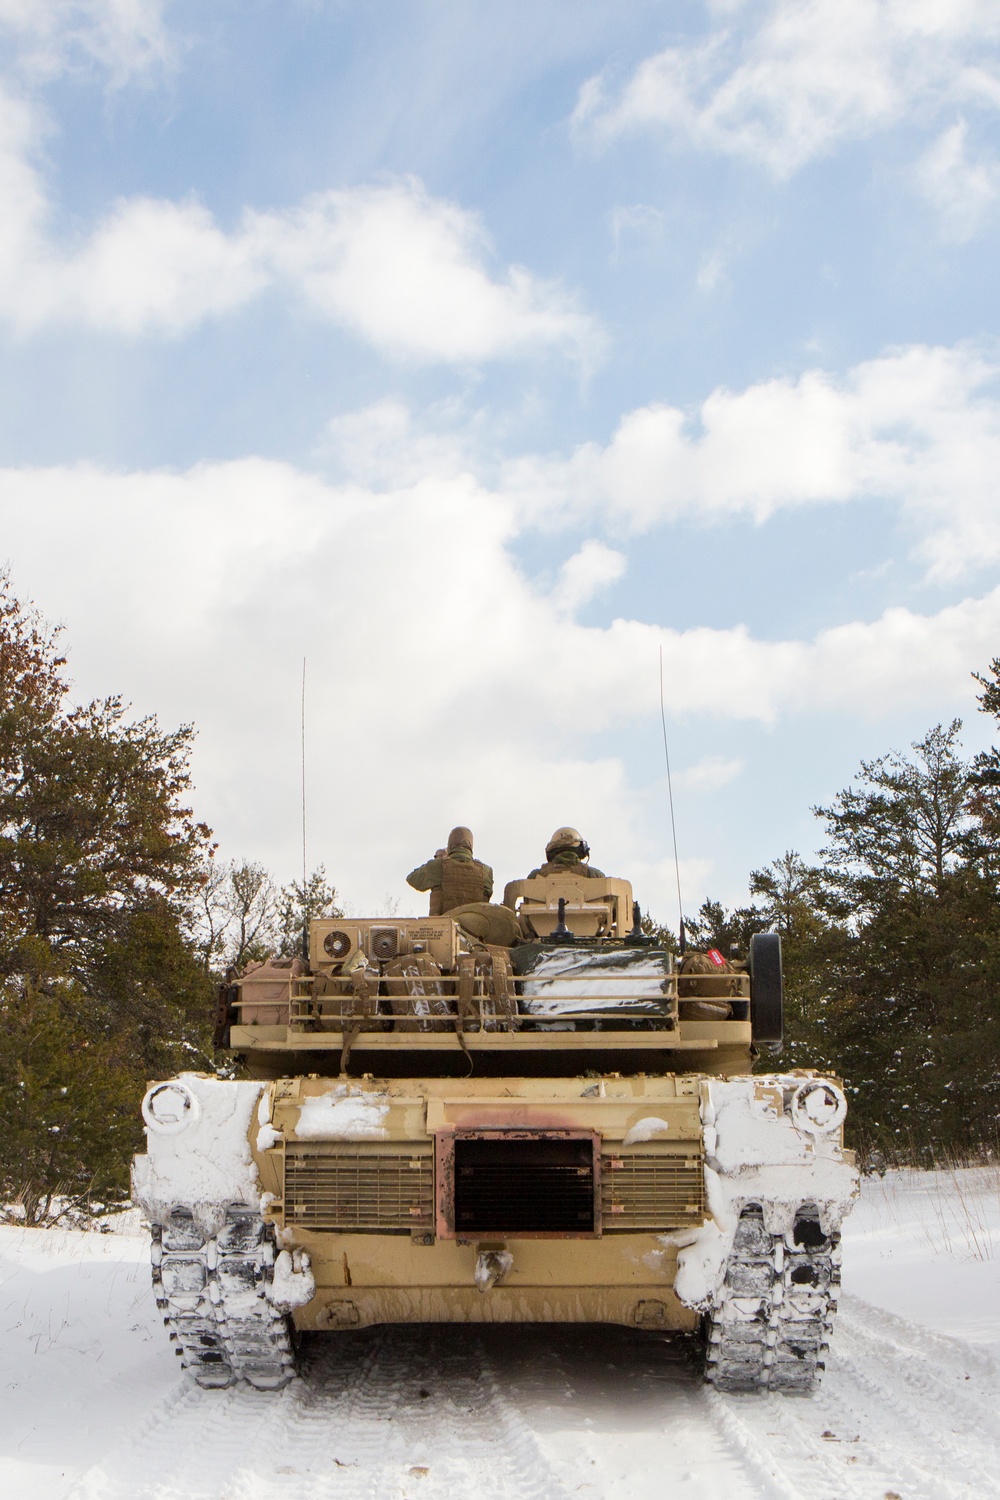 Fox Company, 4th Tank Battalion battles the cold during Winter Break 18